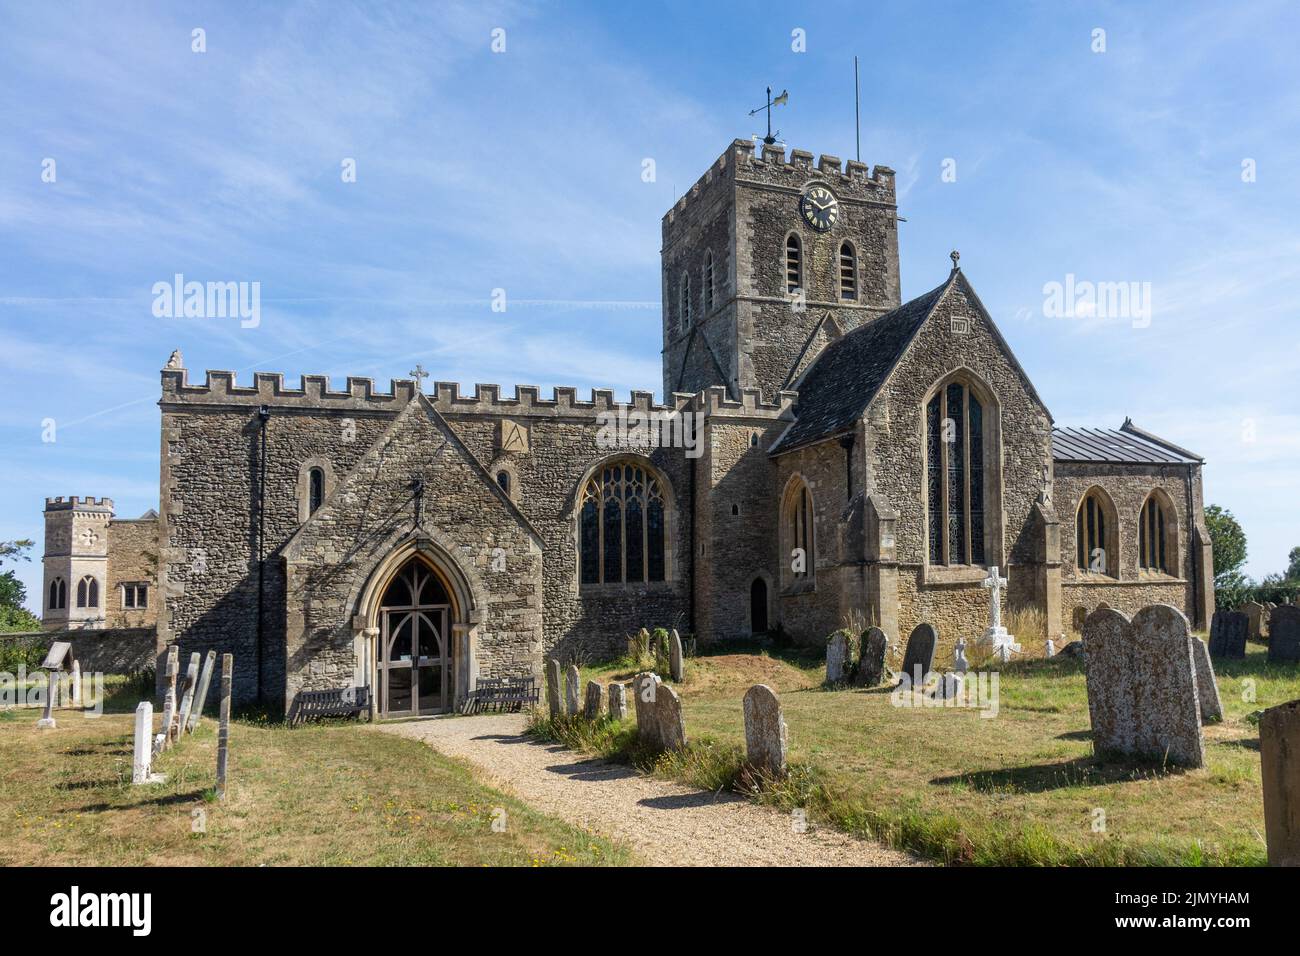 England, Oxfordshire, Buckland church Stock Photo